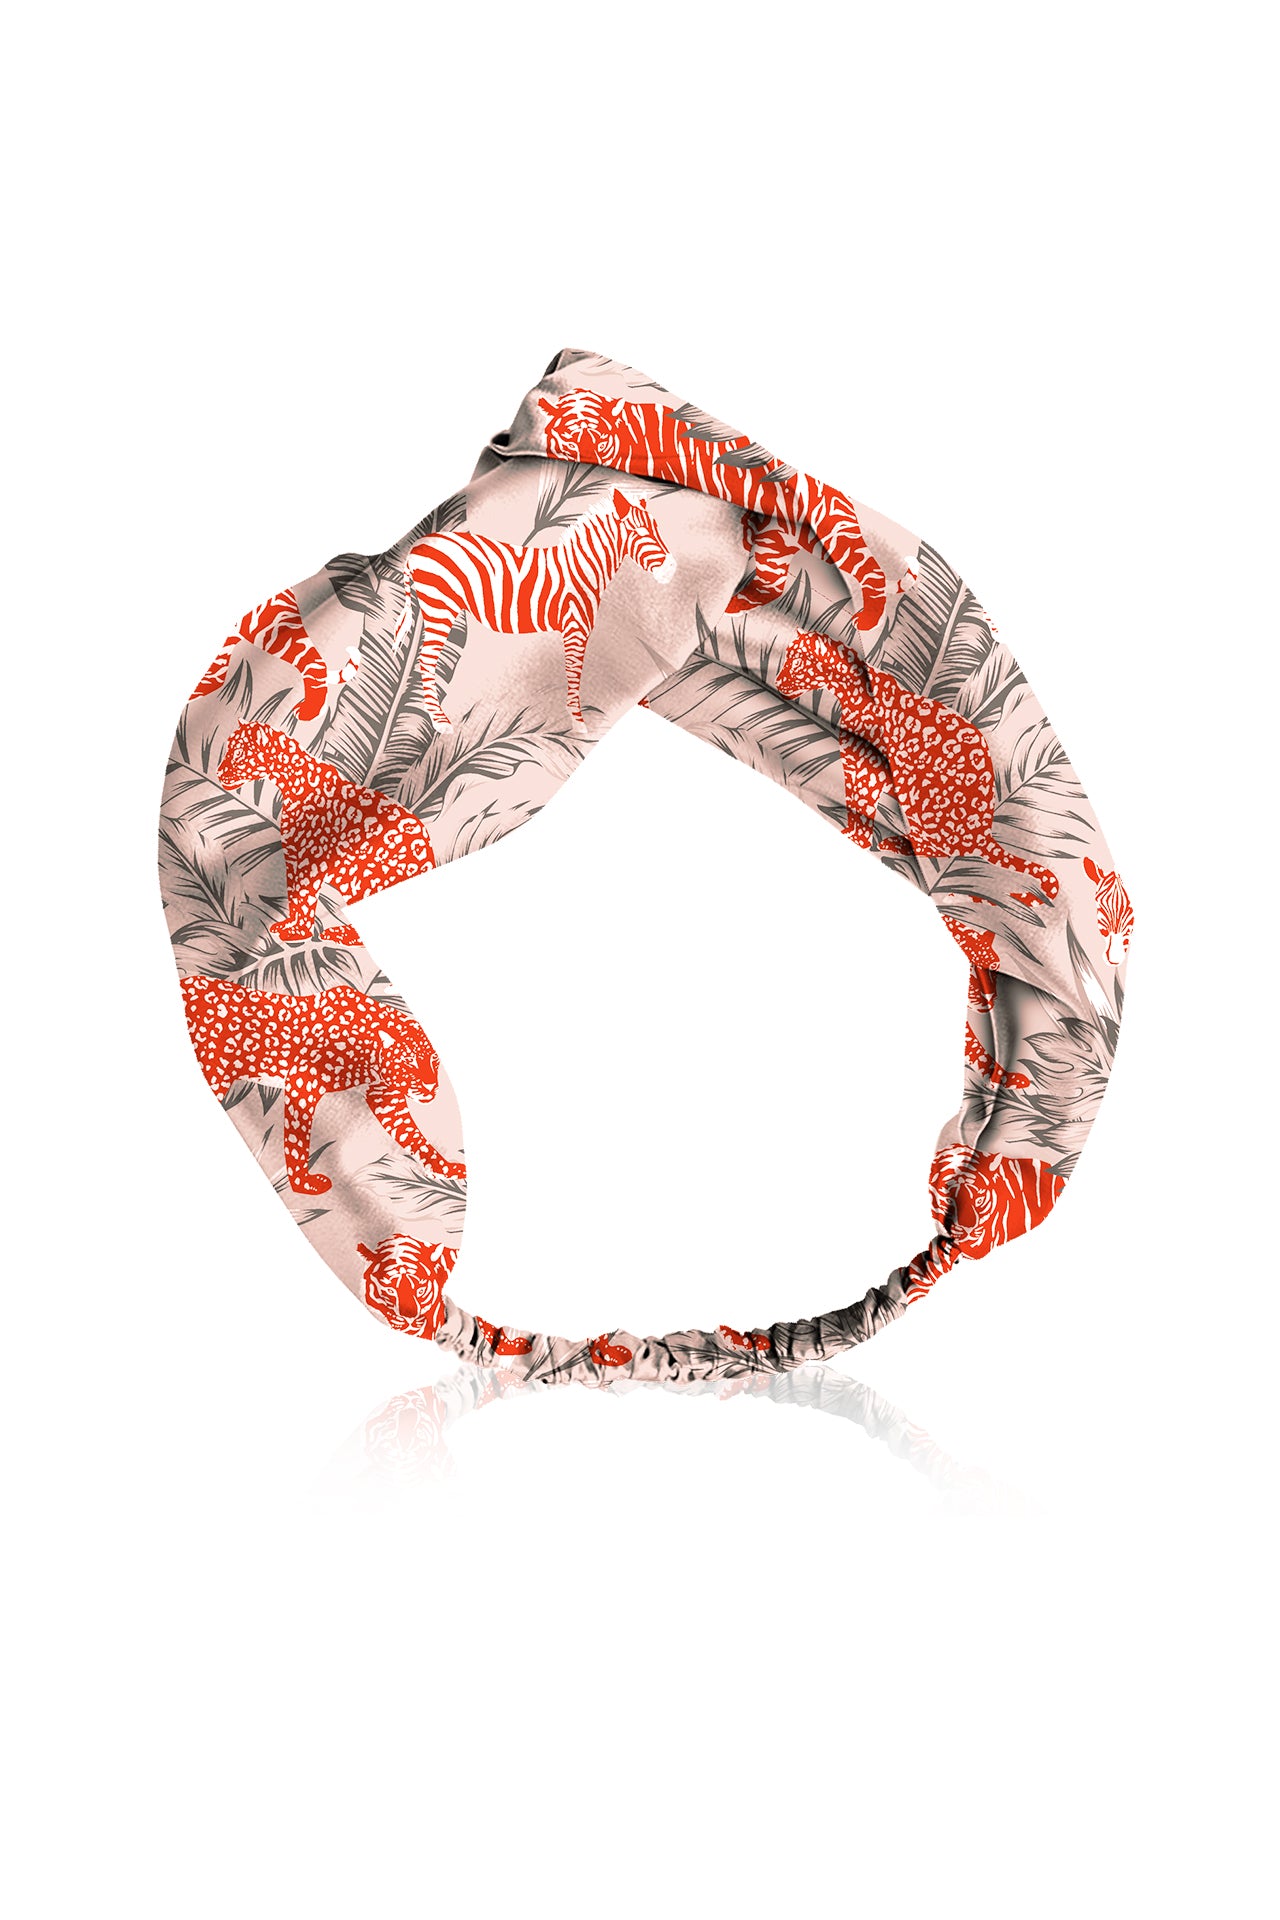 Zebra Print Headband & Headwrap in Orange